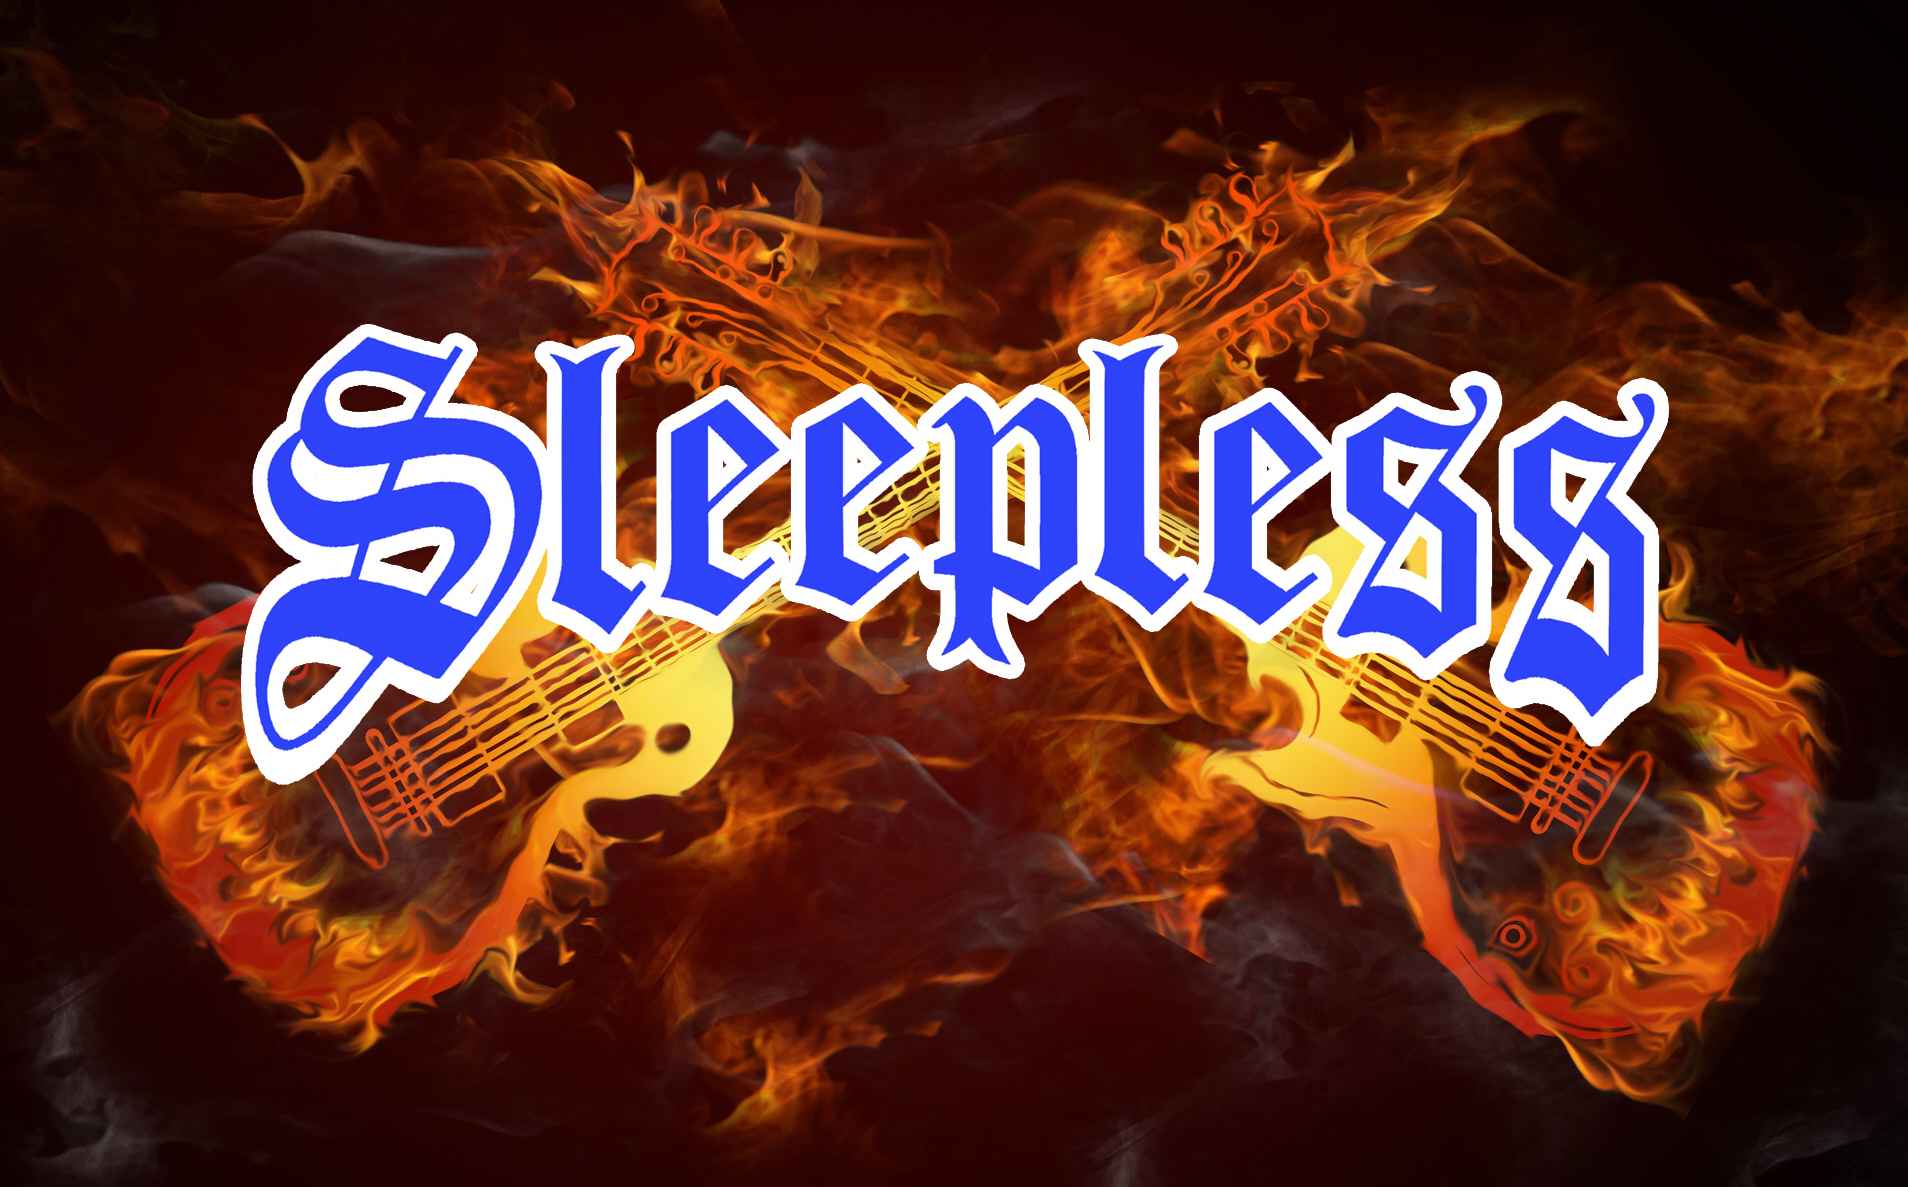 Sleepless_burning guitars